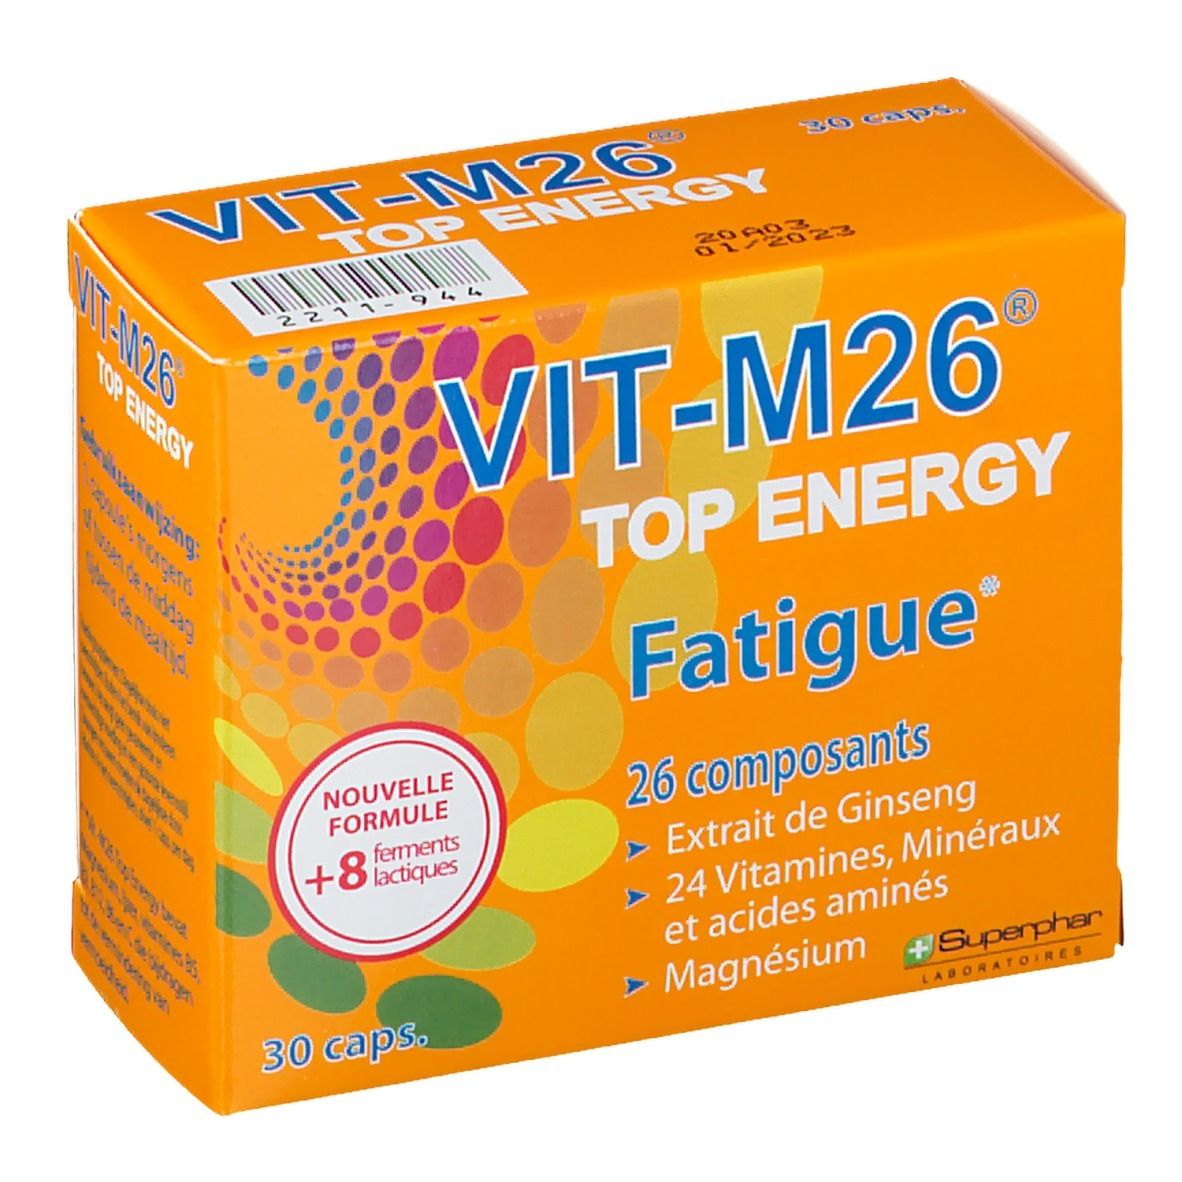 Vit-M26® Top Energy Fatigue